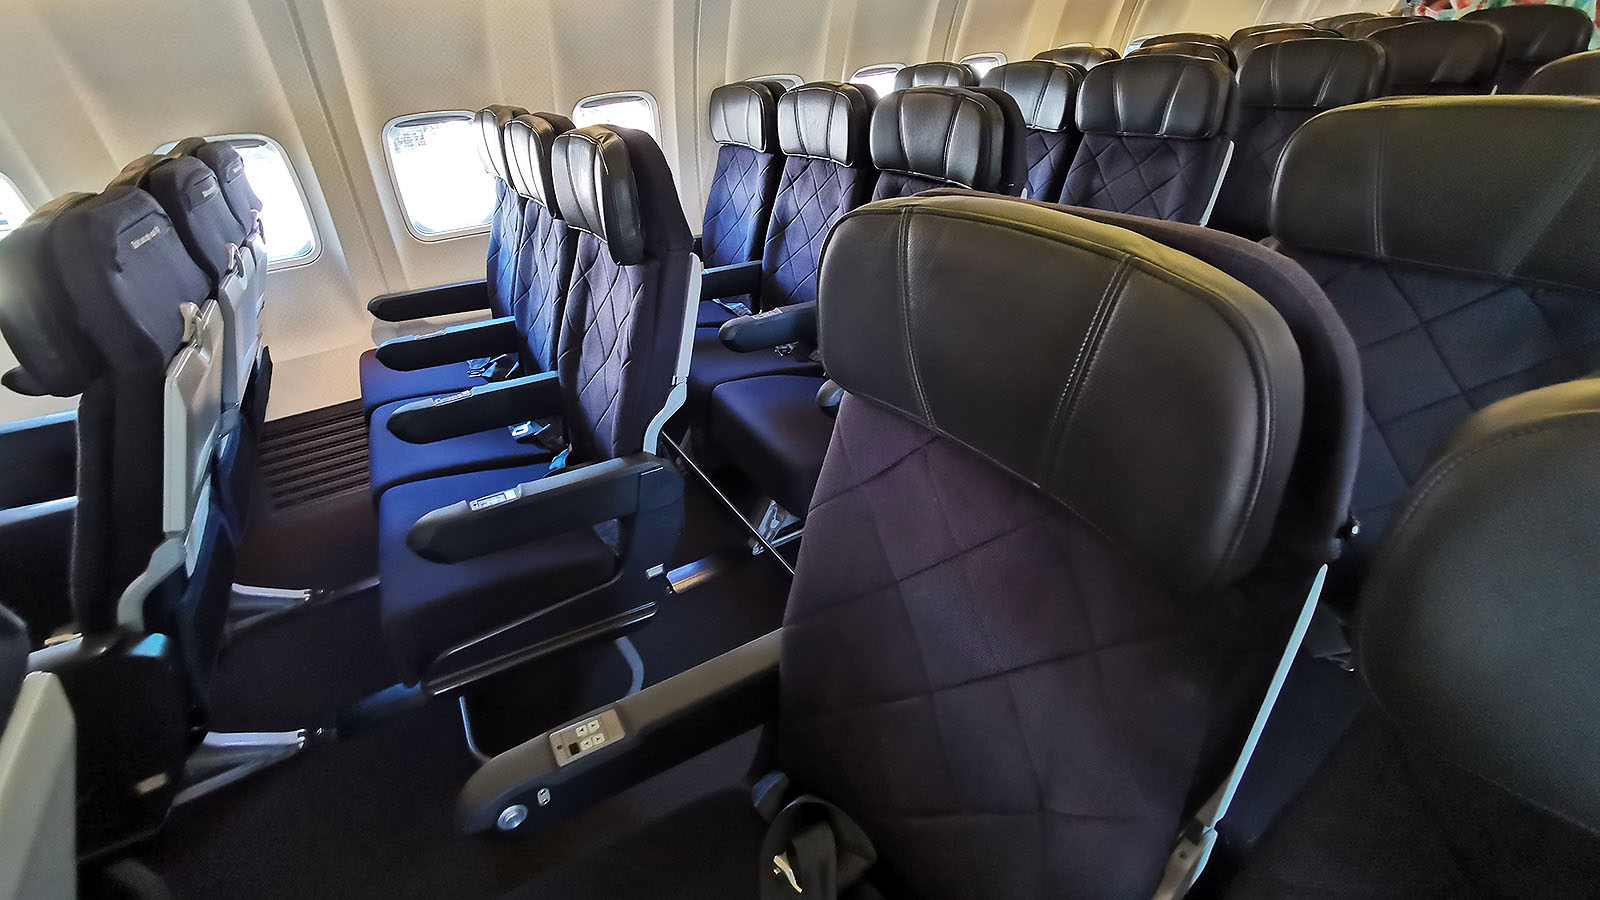 Qantas Boeing 737 Economy Class cabin